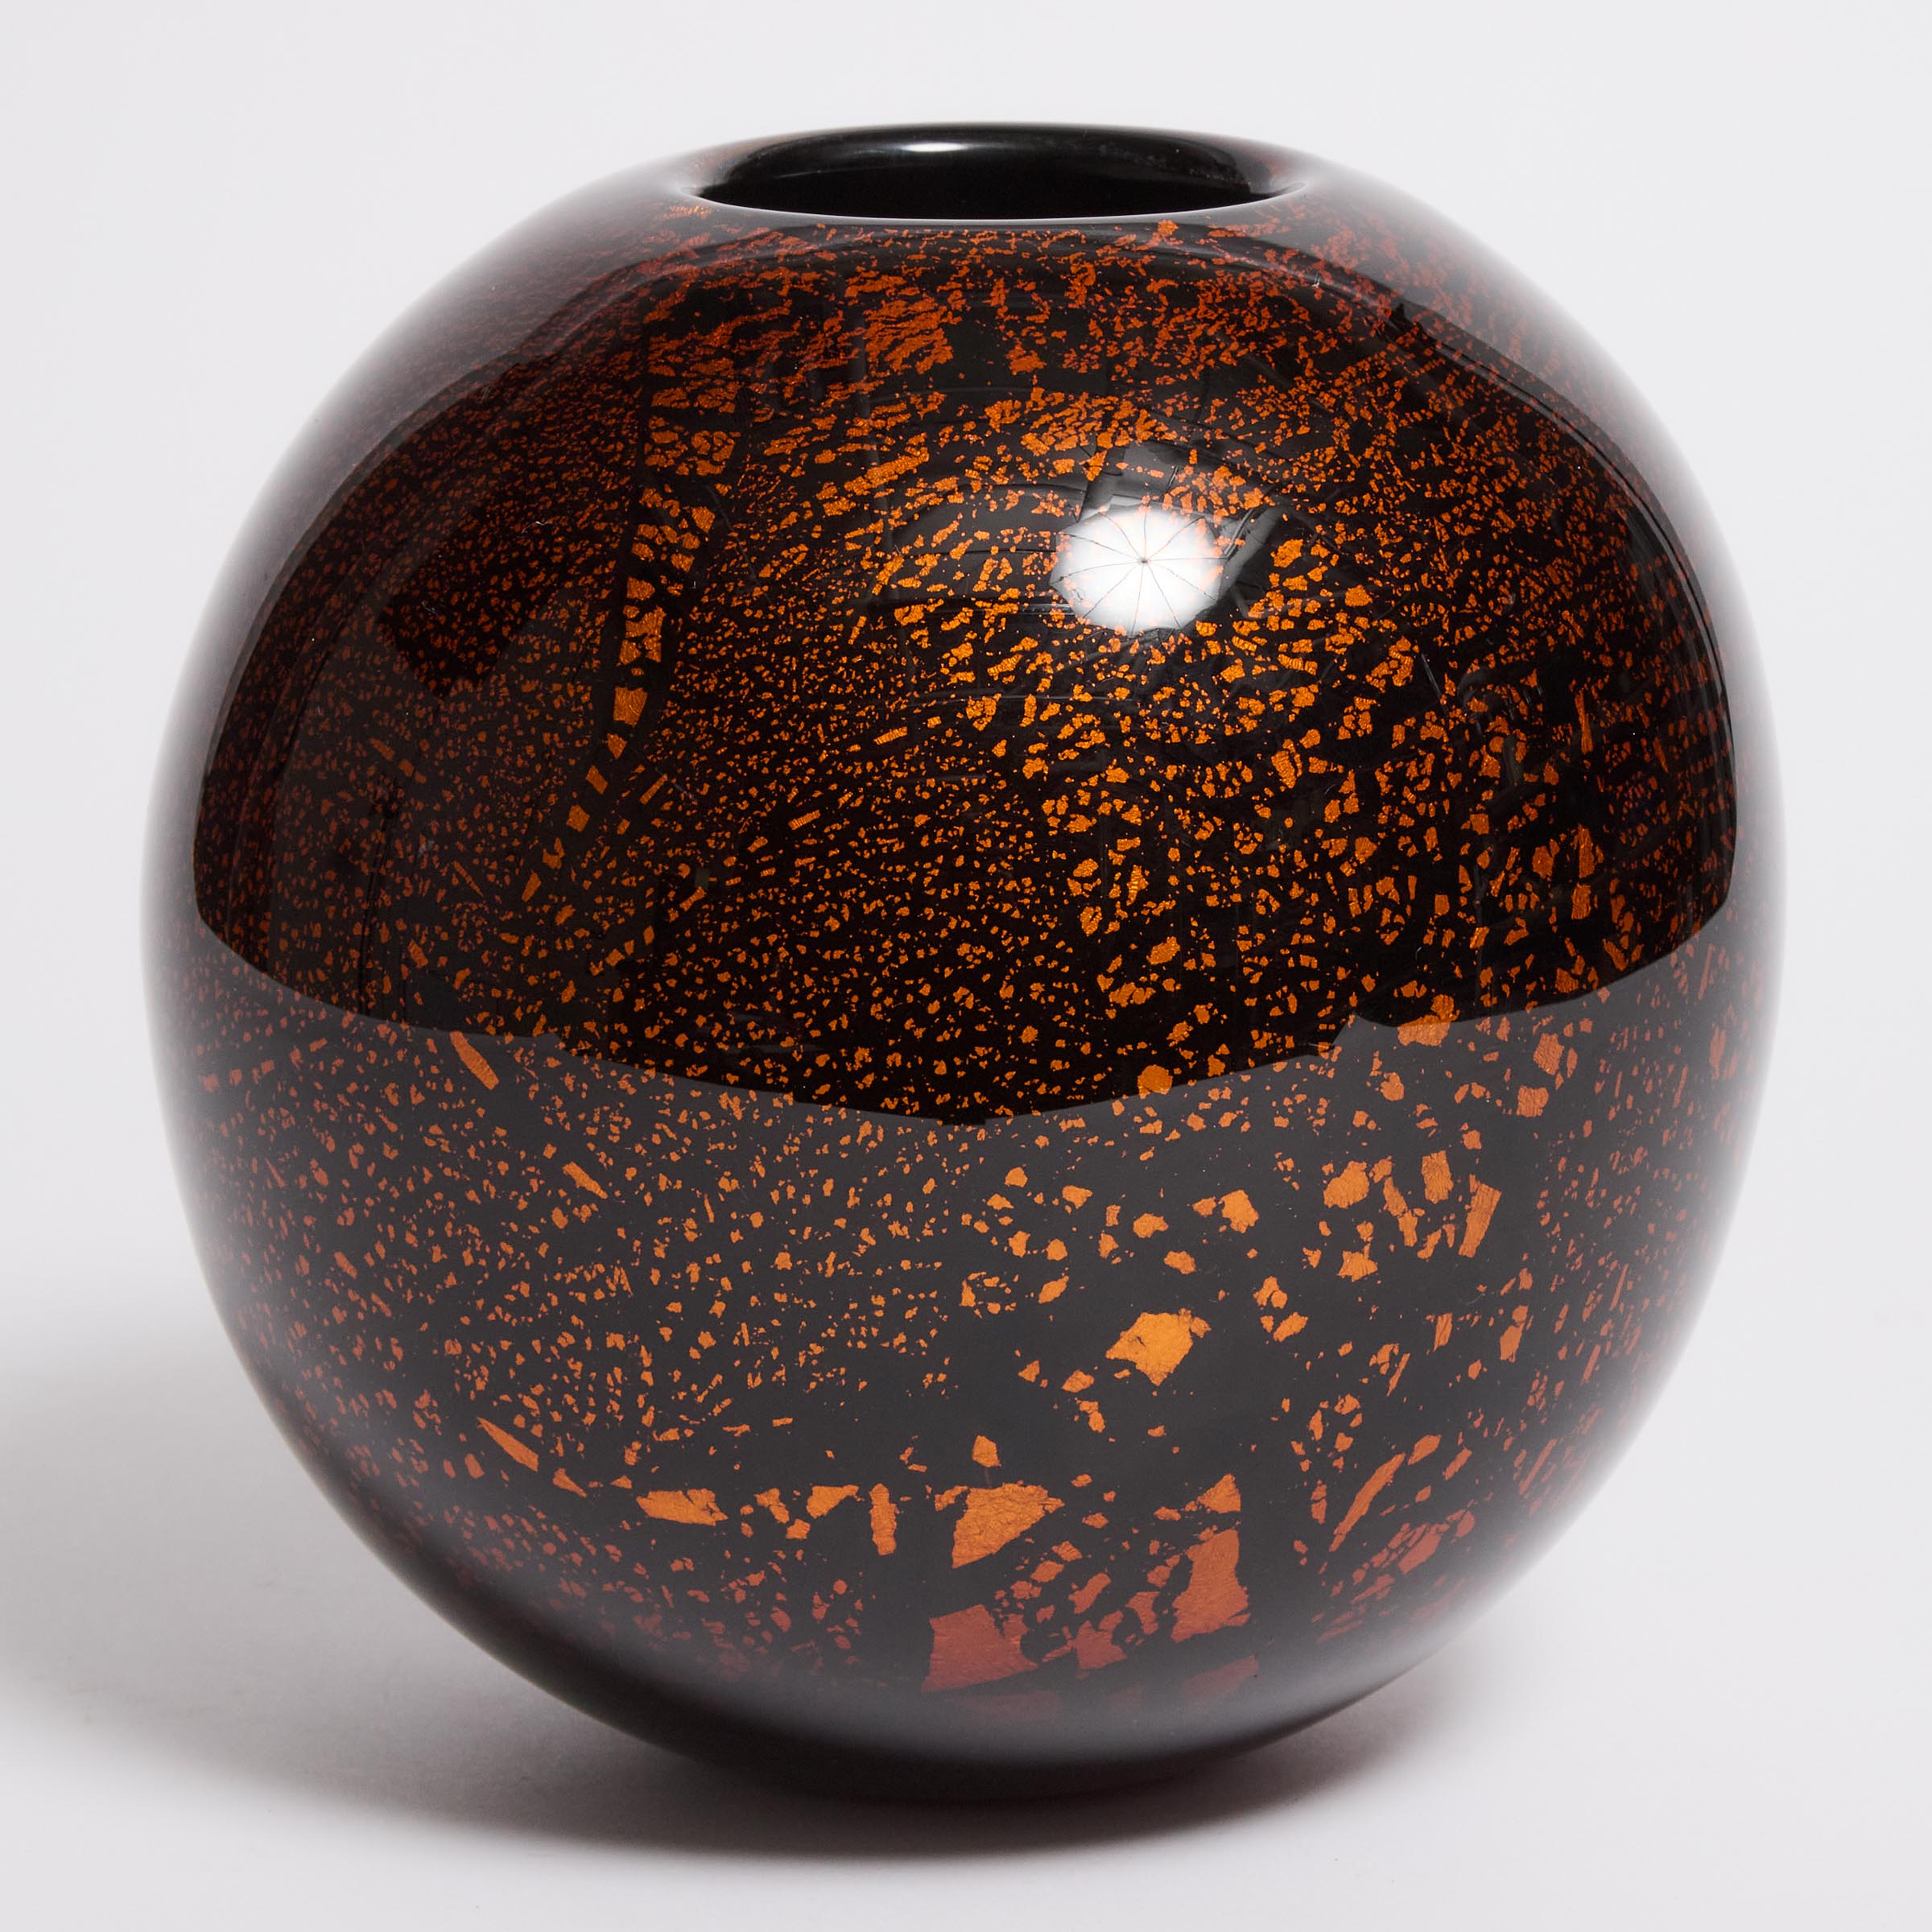 Murano Globular Black and Copper 2fb04f3